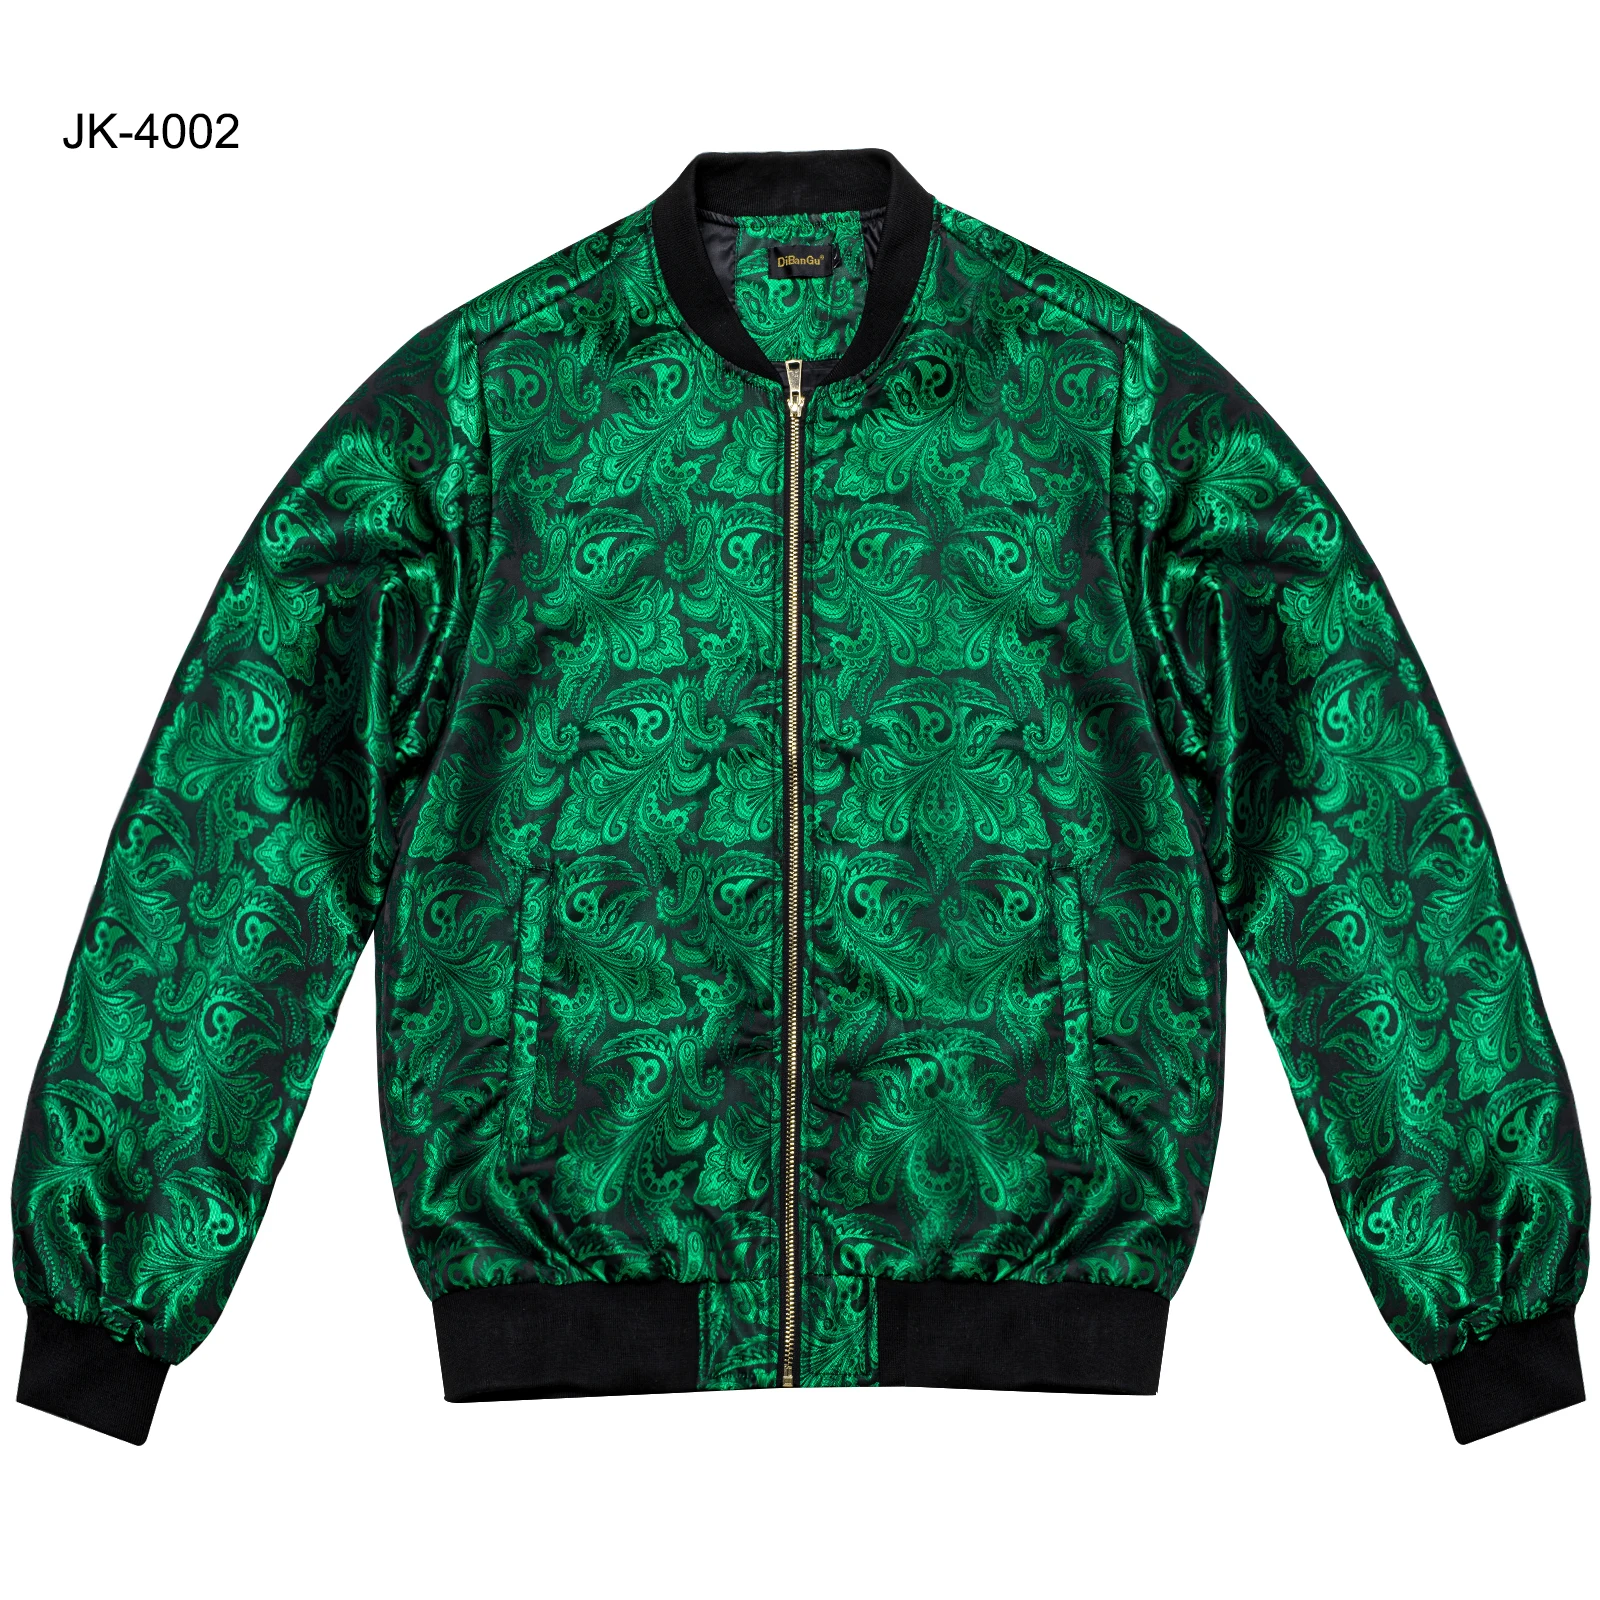 

Men's High Street Green Zipper Jacket Causal Jacquard Paisley Coat Fashion Woven Sport Streetwear Uniform Long Sleeves for Party